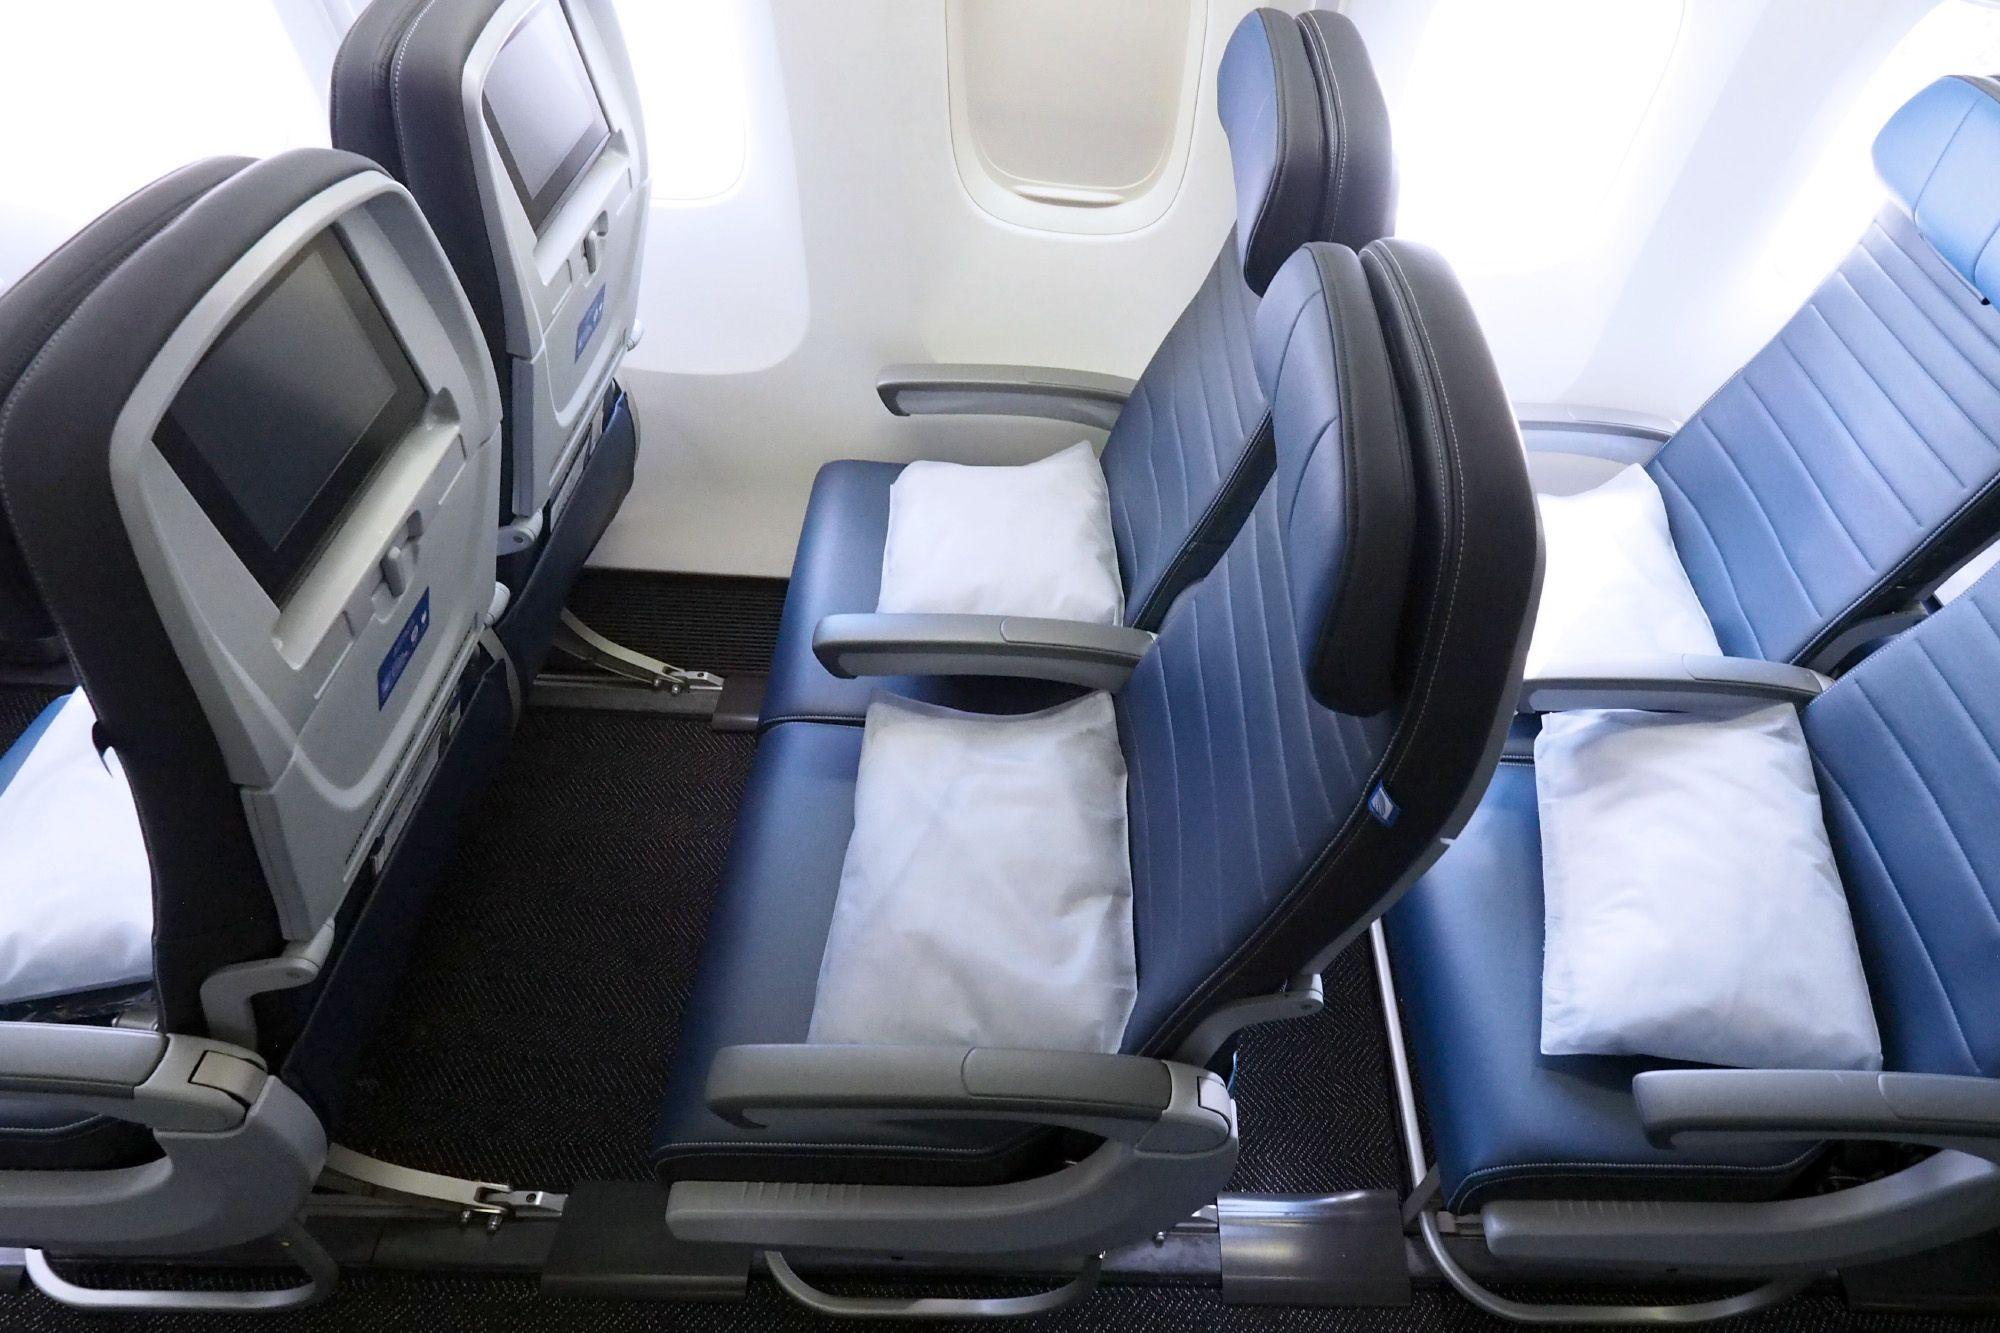 United Economy Seat Logo - Where To Sit When Flying United's 767 300ER: Economy